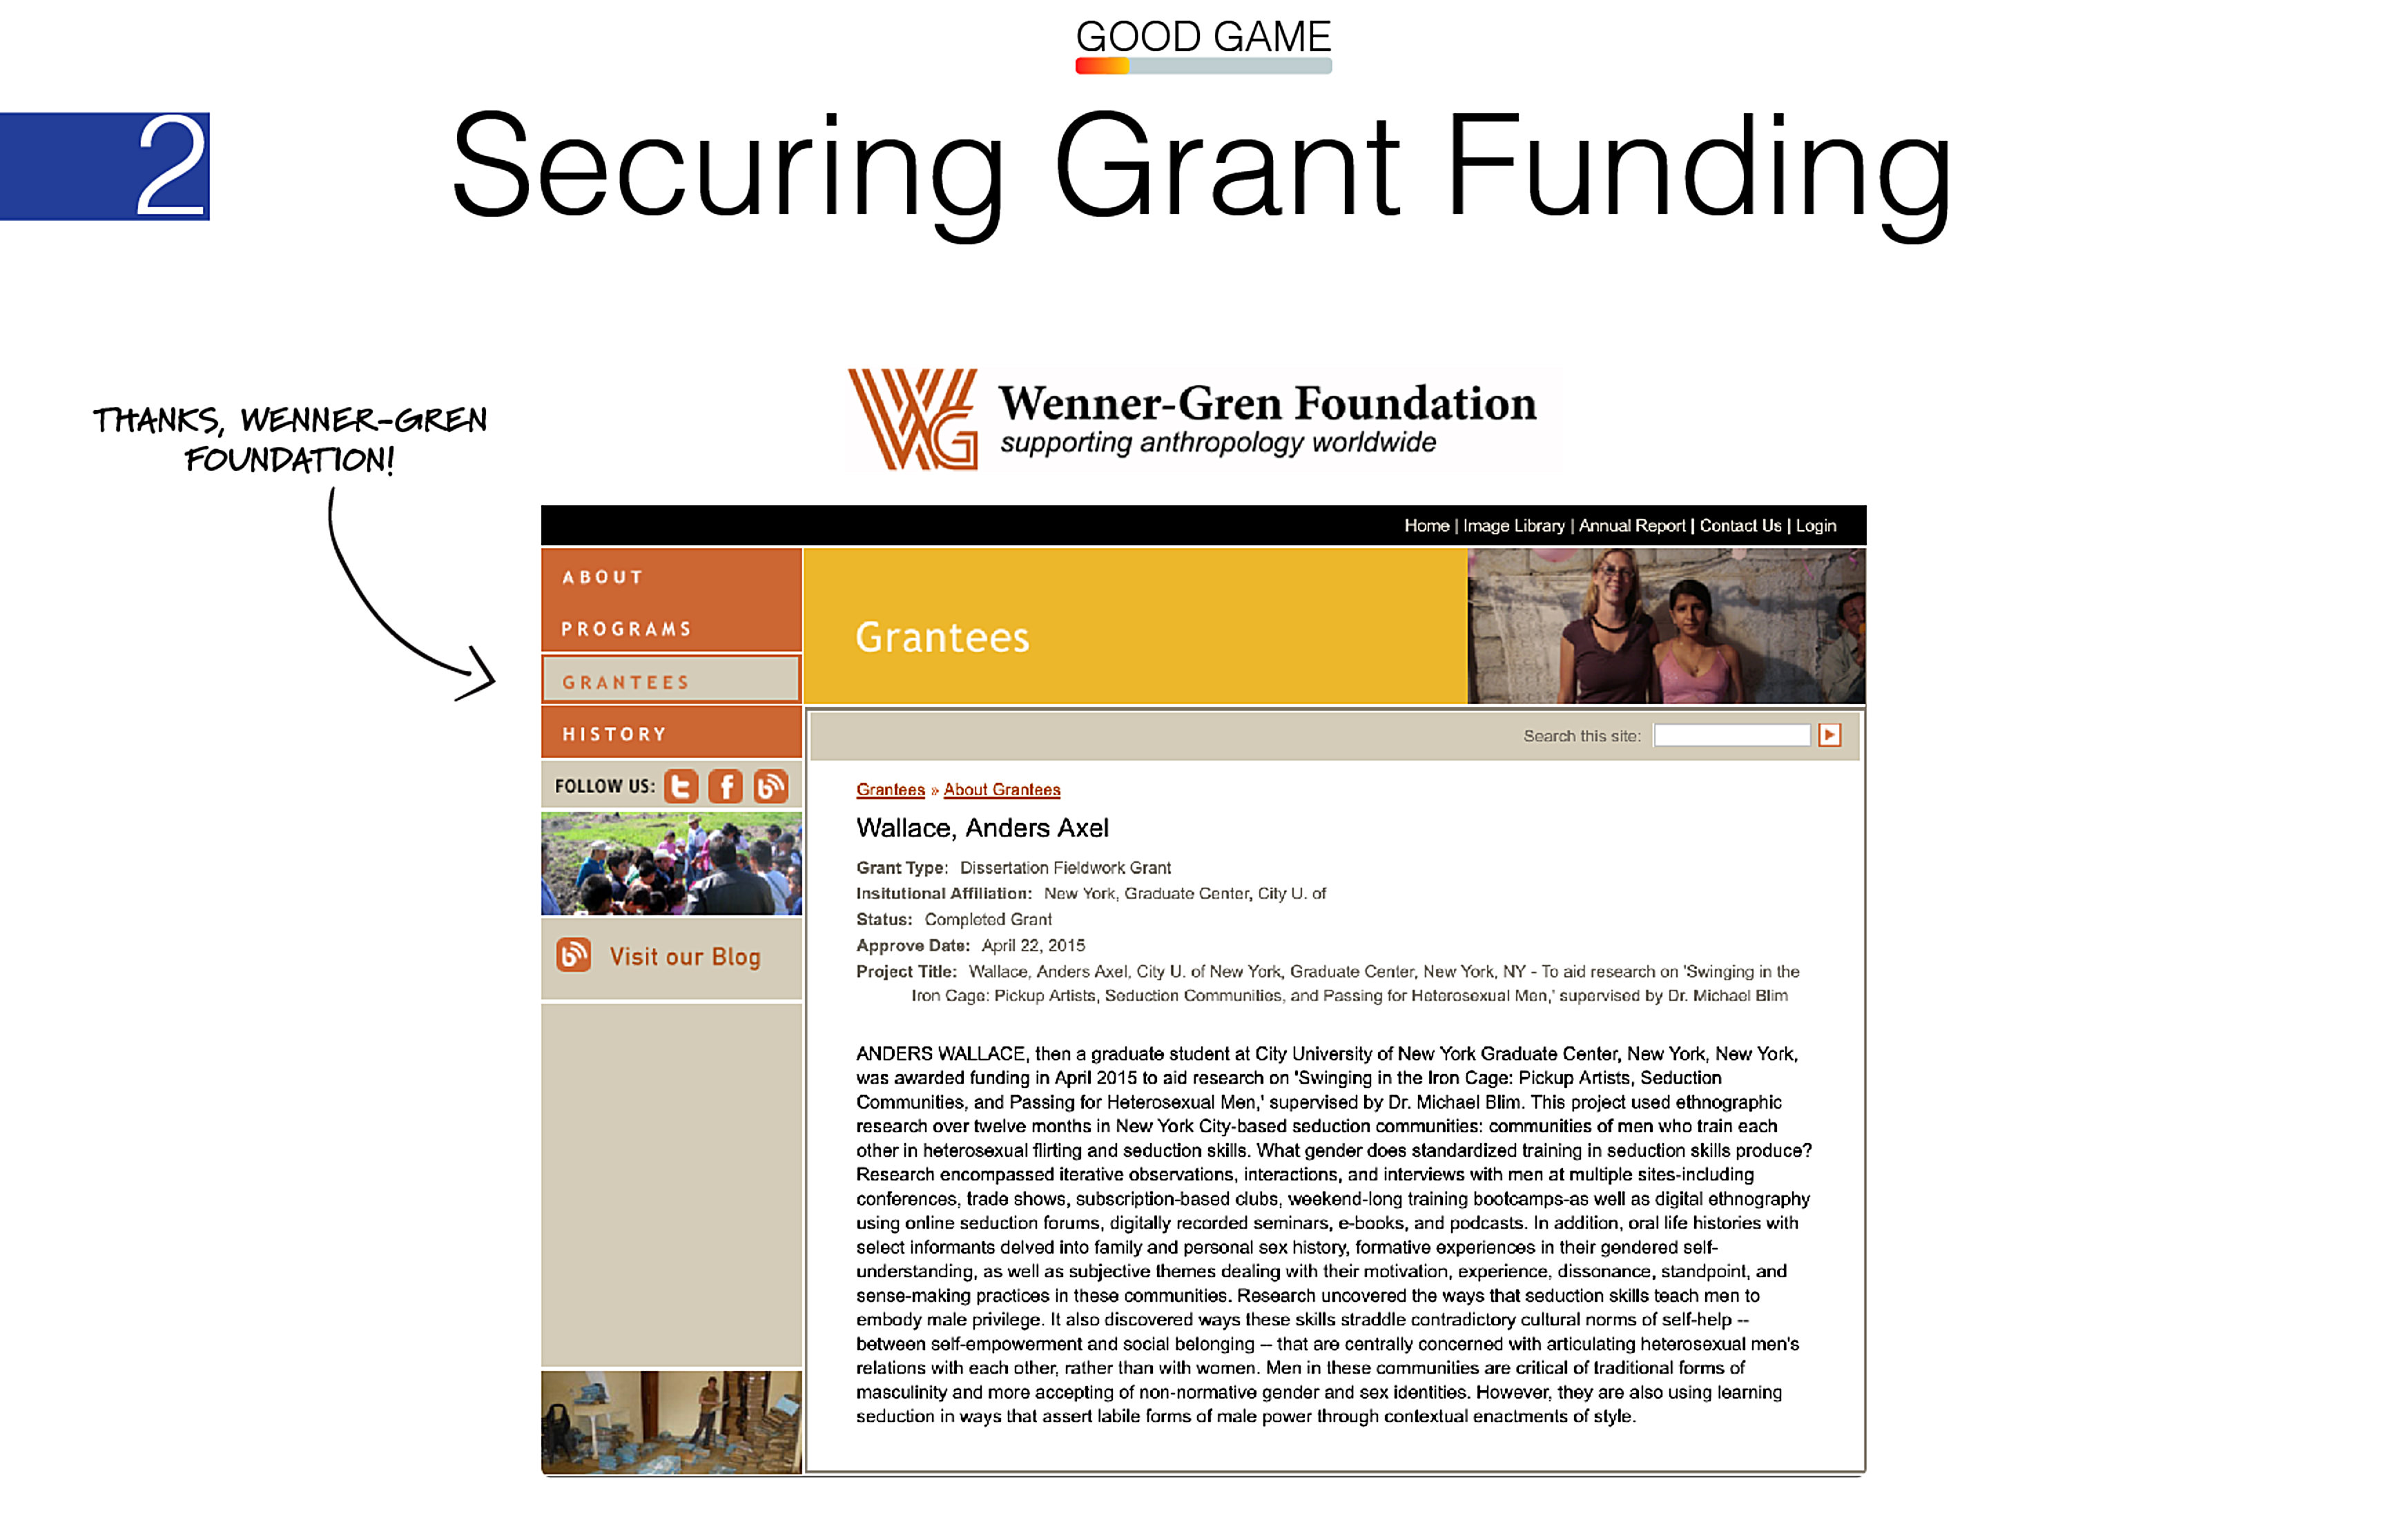 winning grant funding to pursue original ethnographic research